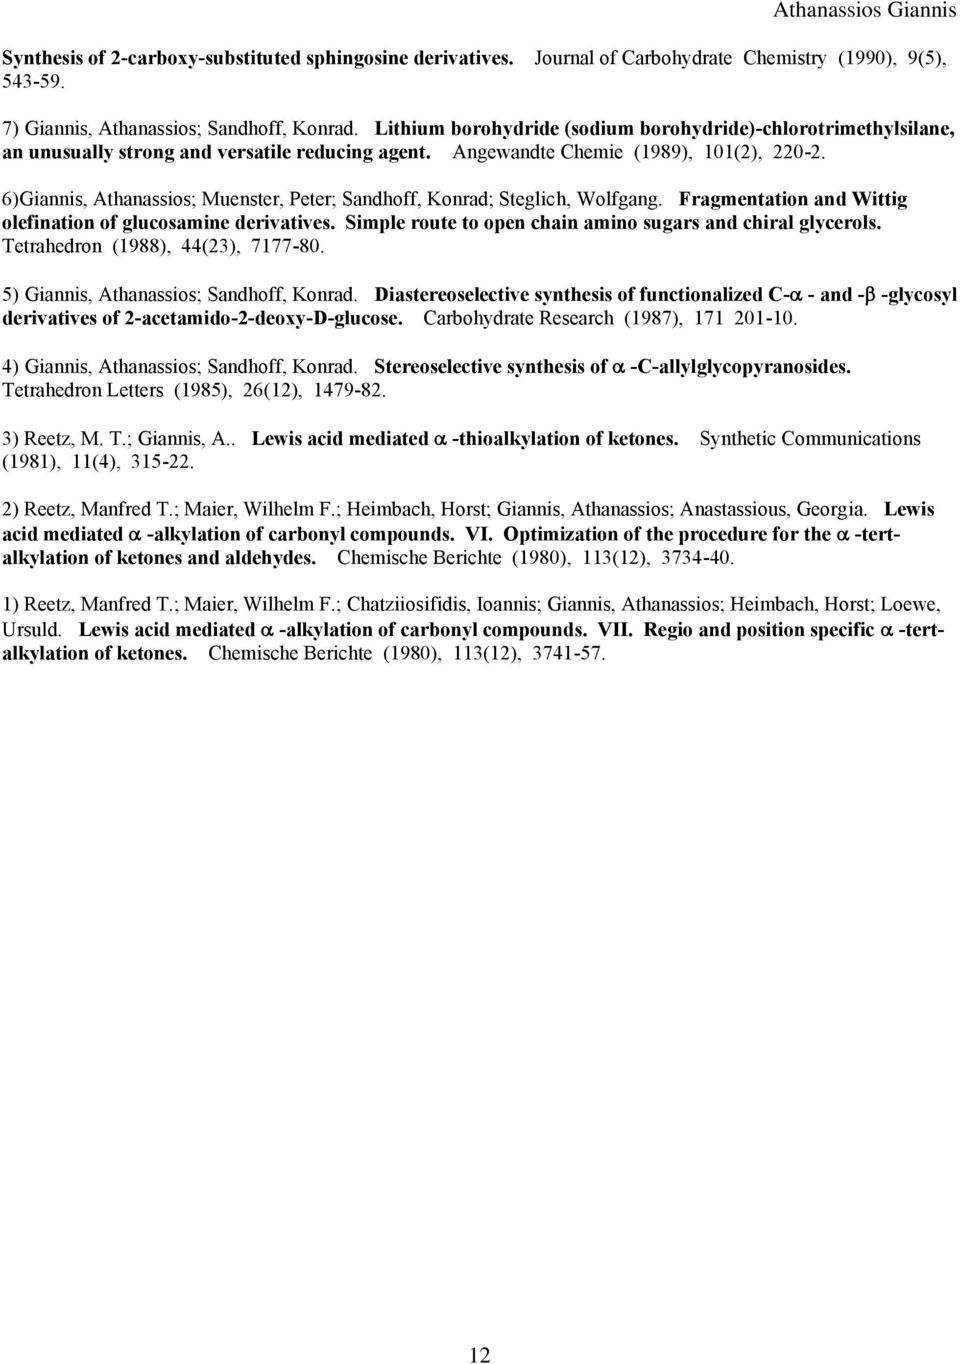 6)Giannis, Athanassios; Muenster, Peter; Sandhoff, Konrad; Steglich, Wolfgang. Fragmentation and Wittig olefination of glucosamine derivatives.